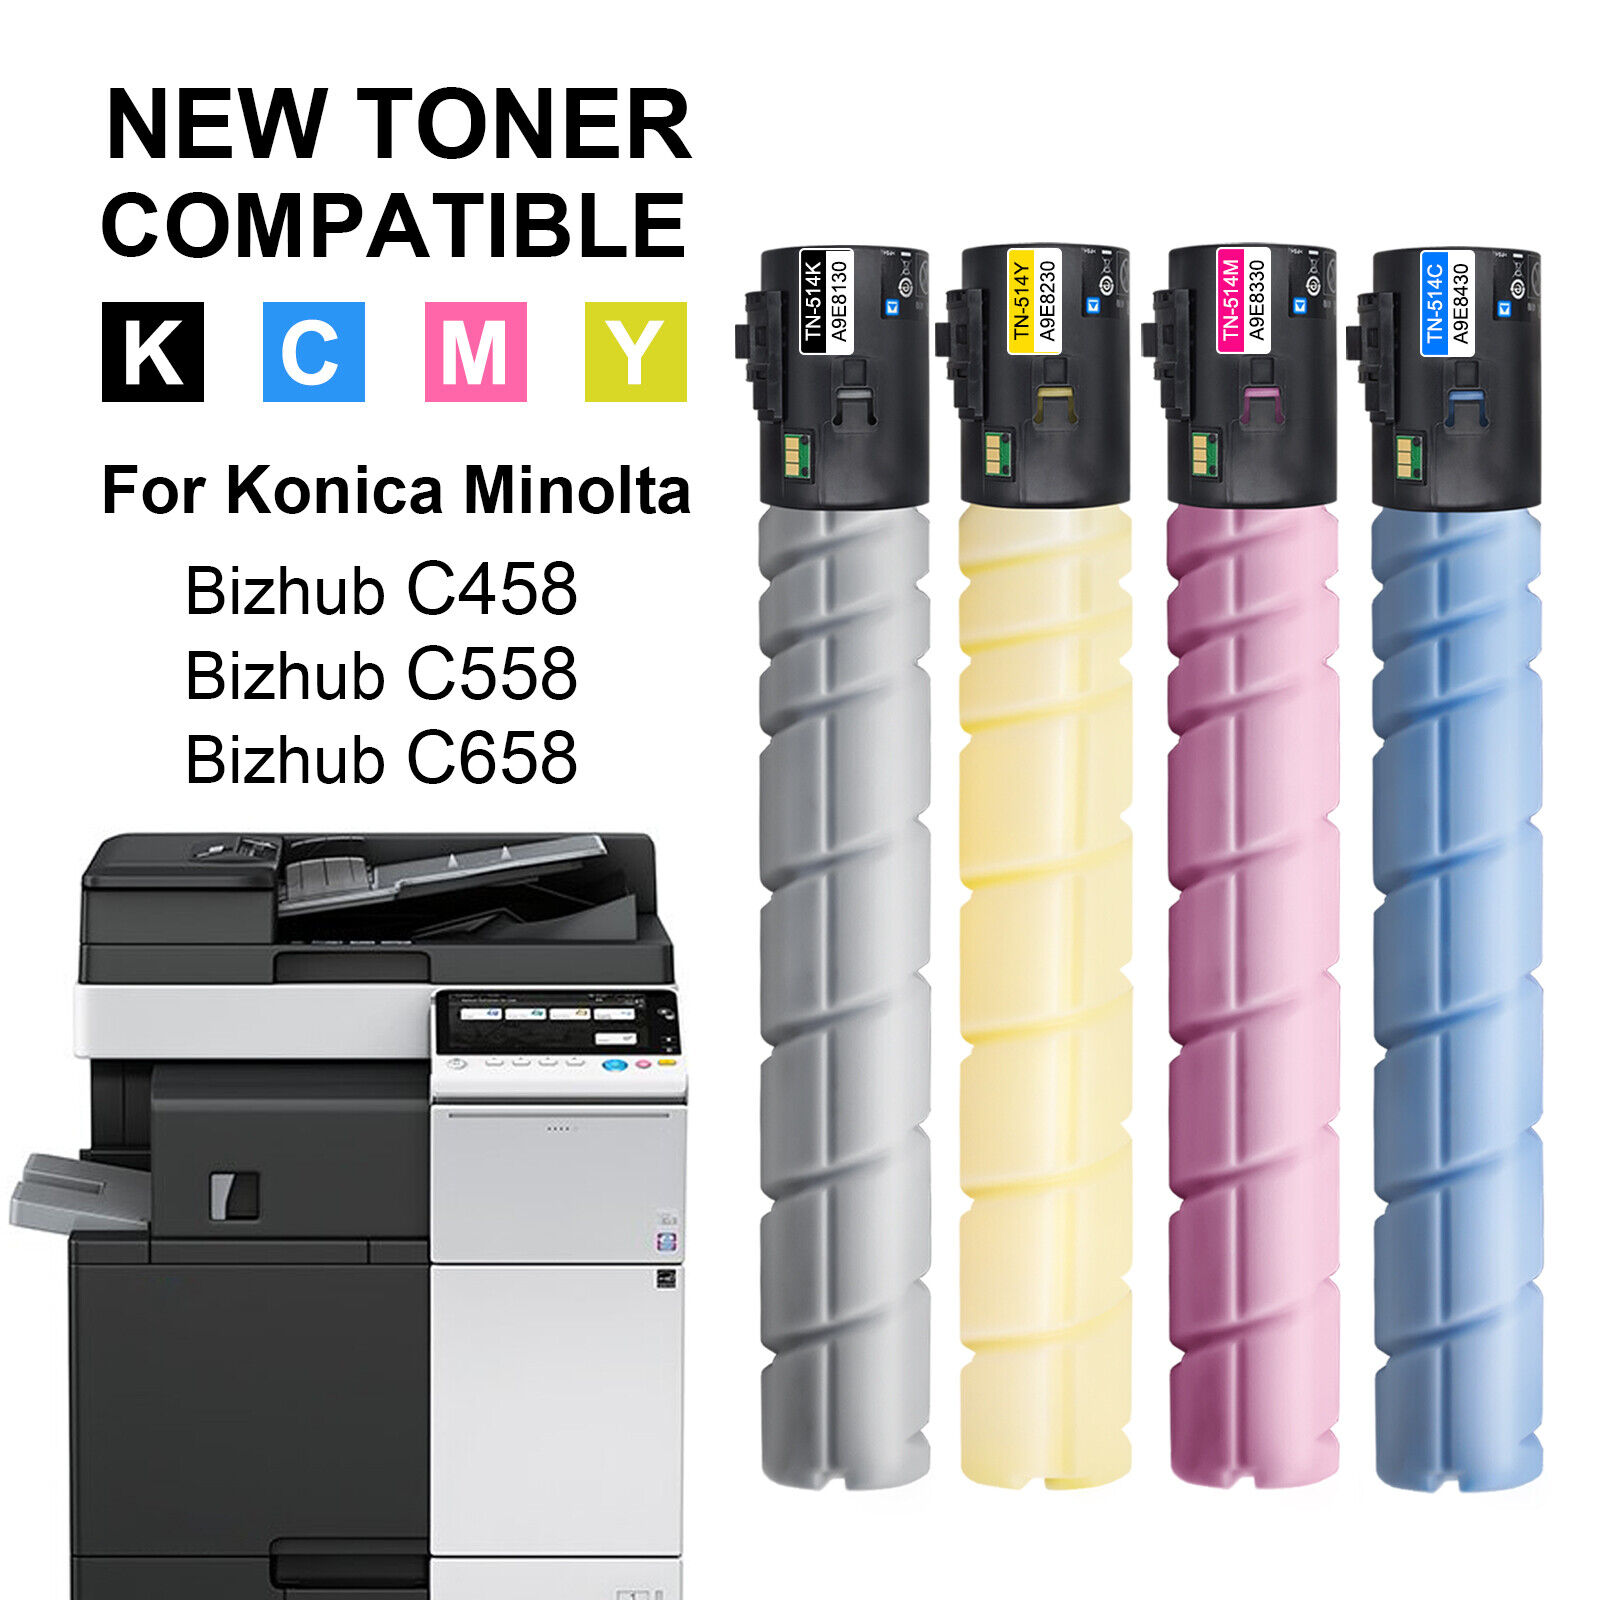 TN-514Y TN-514M TN-514C TN-514K Toner Cartridge for Konica Minolta bizhub C458